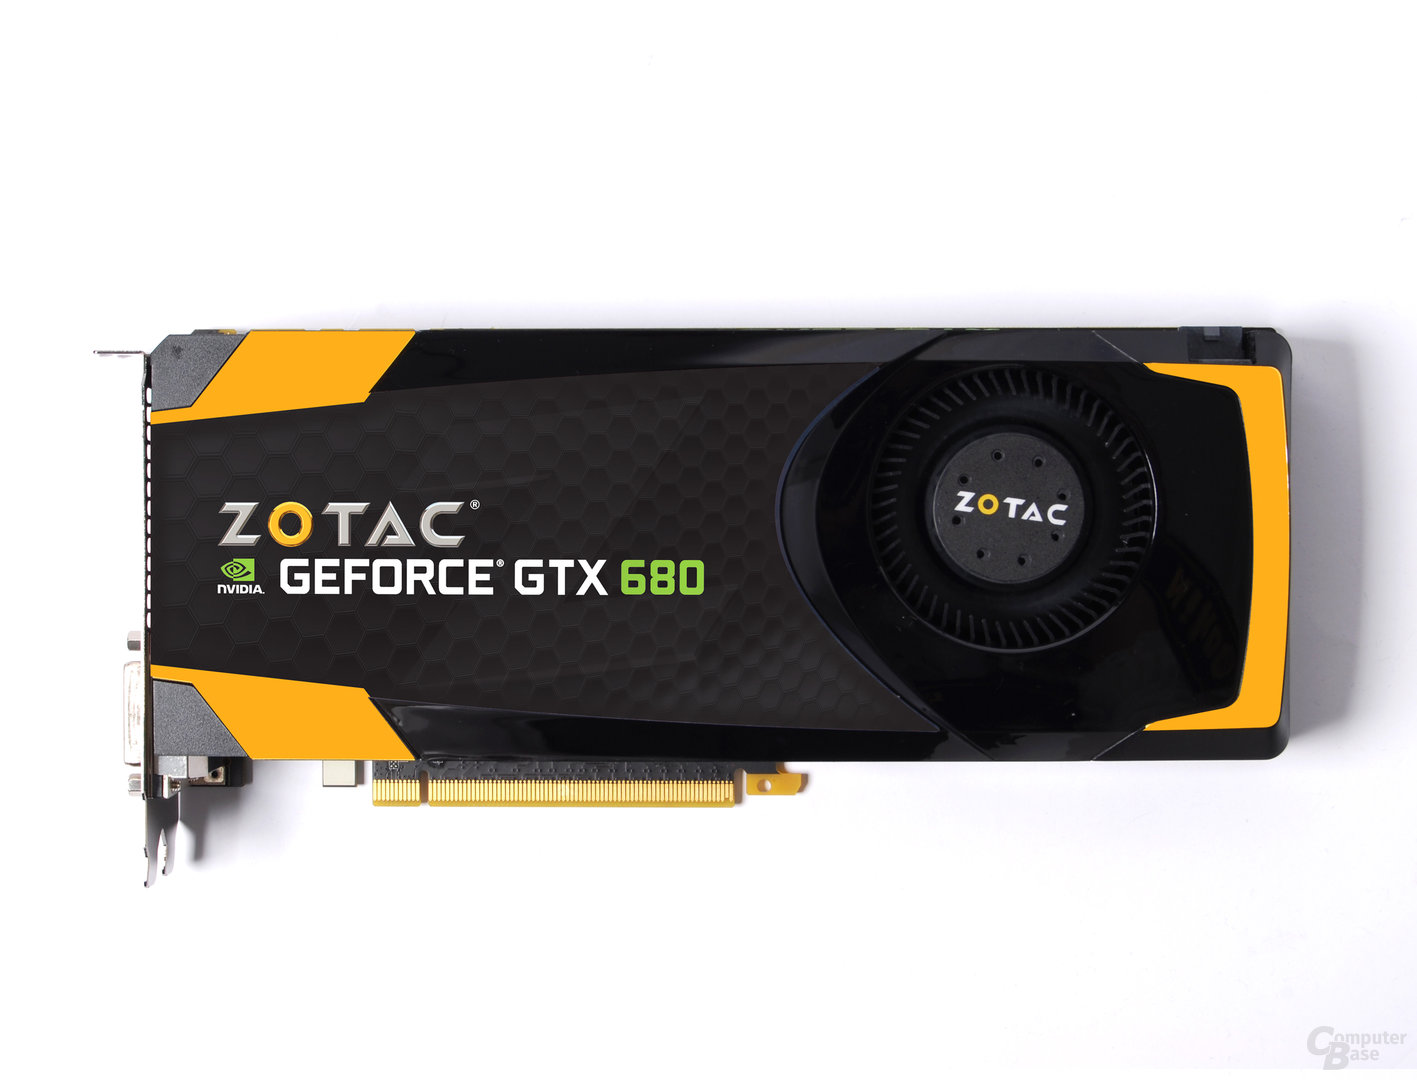 Zotac GeForce GTX 680 4 GByte